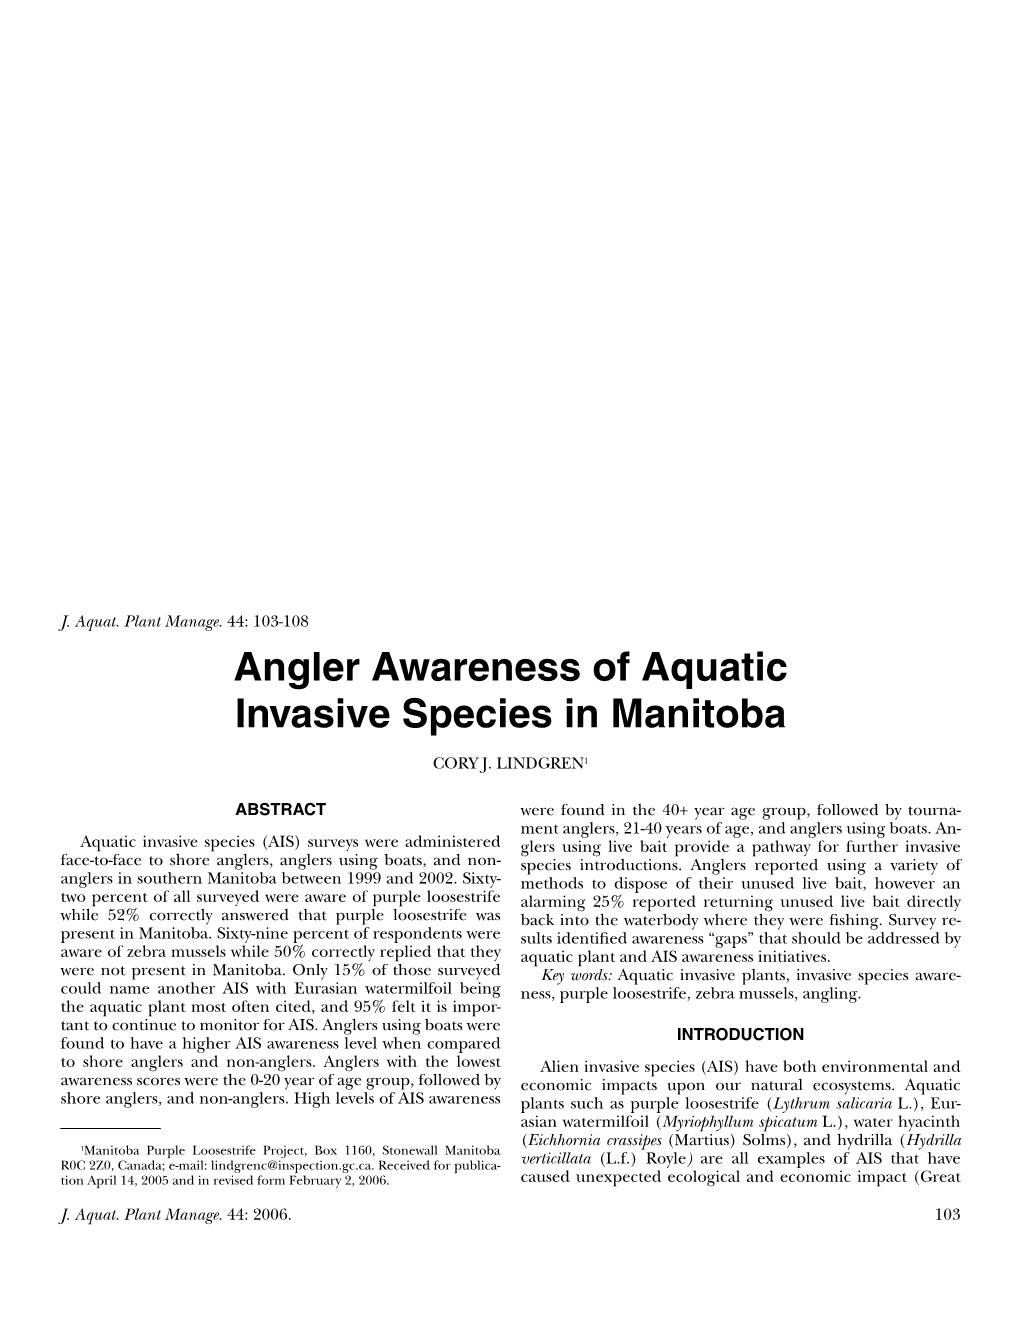 Angler Awareness of Aquatic Invasive Species in Manitoba